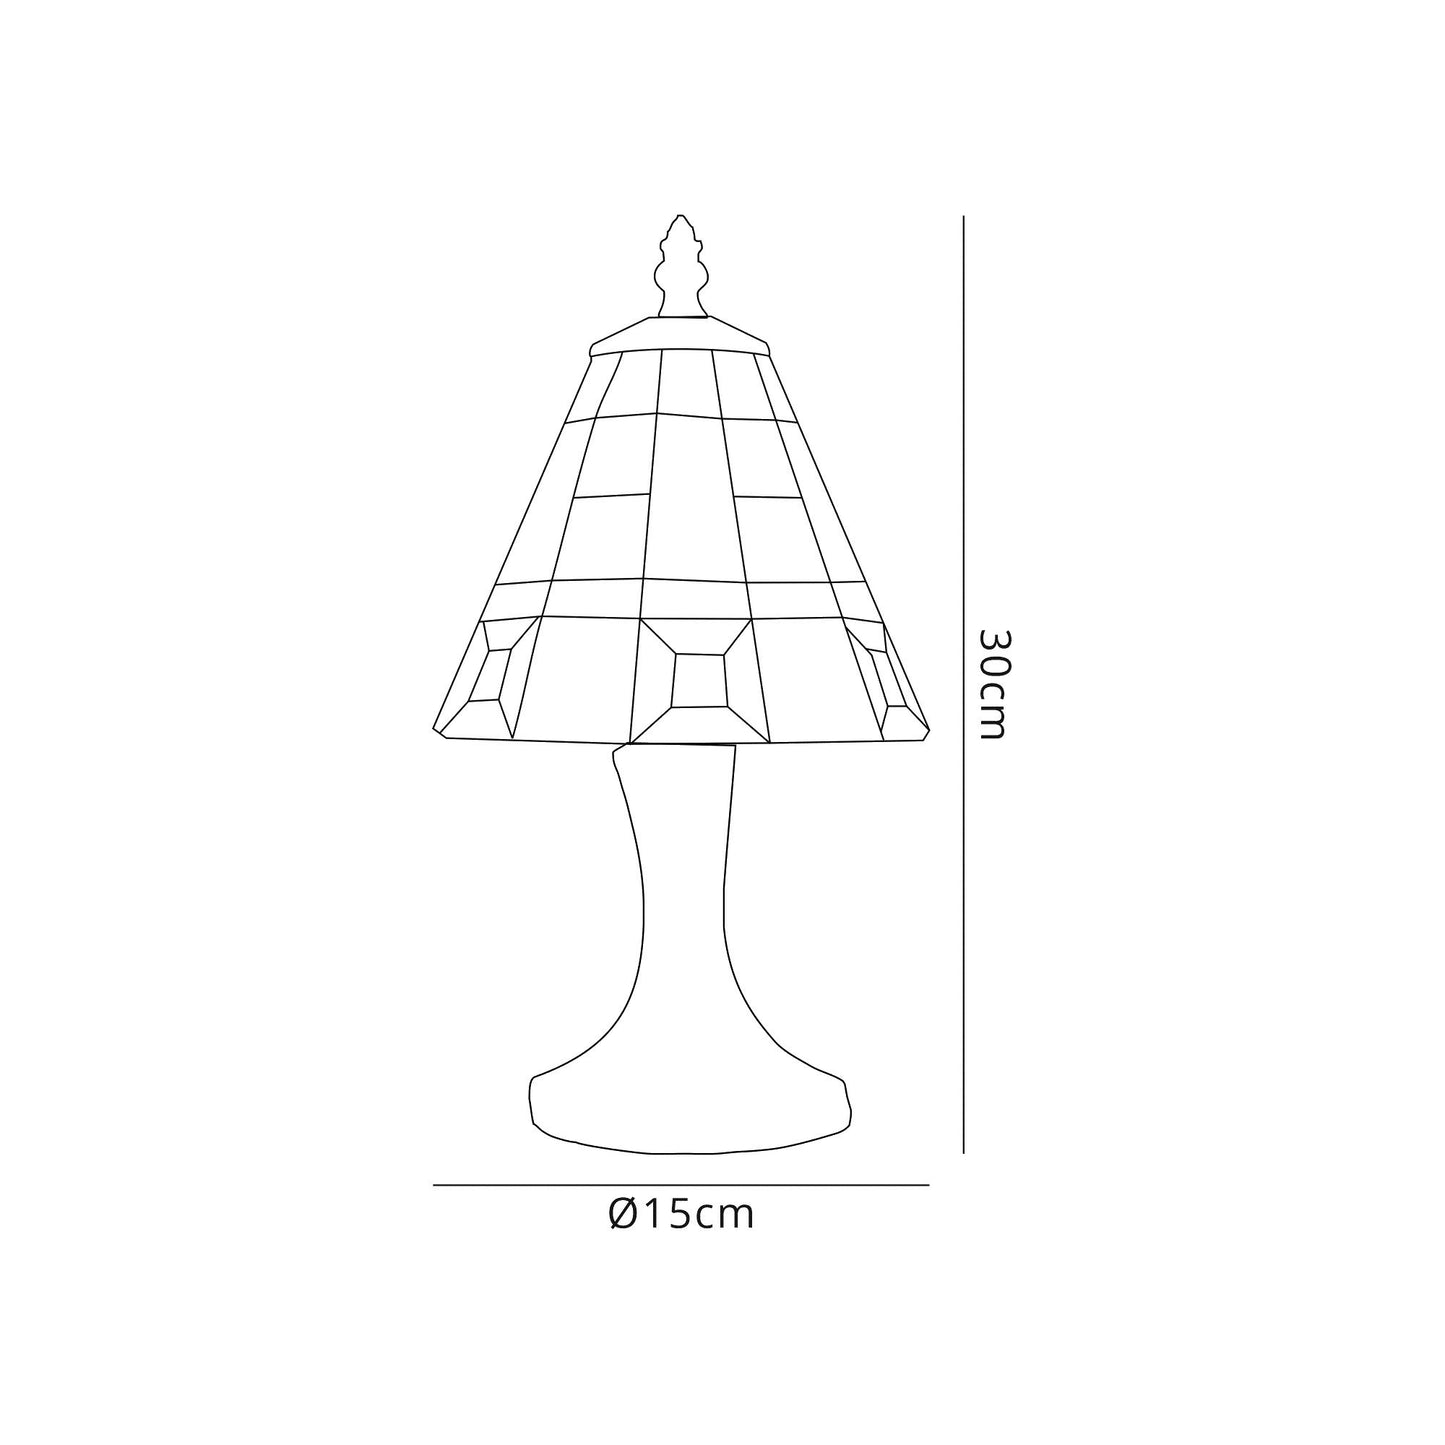 Chess Tiffany Table Lamp